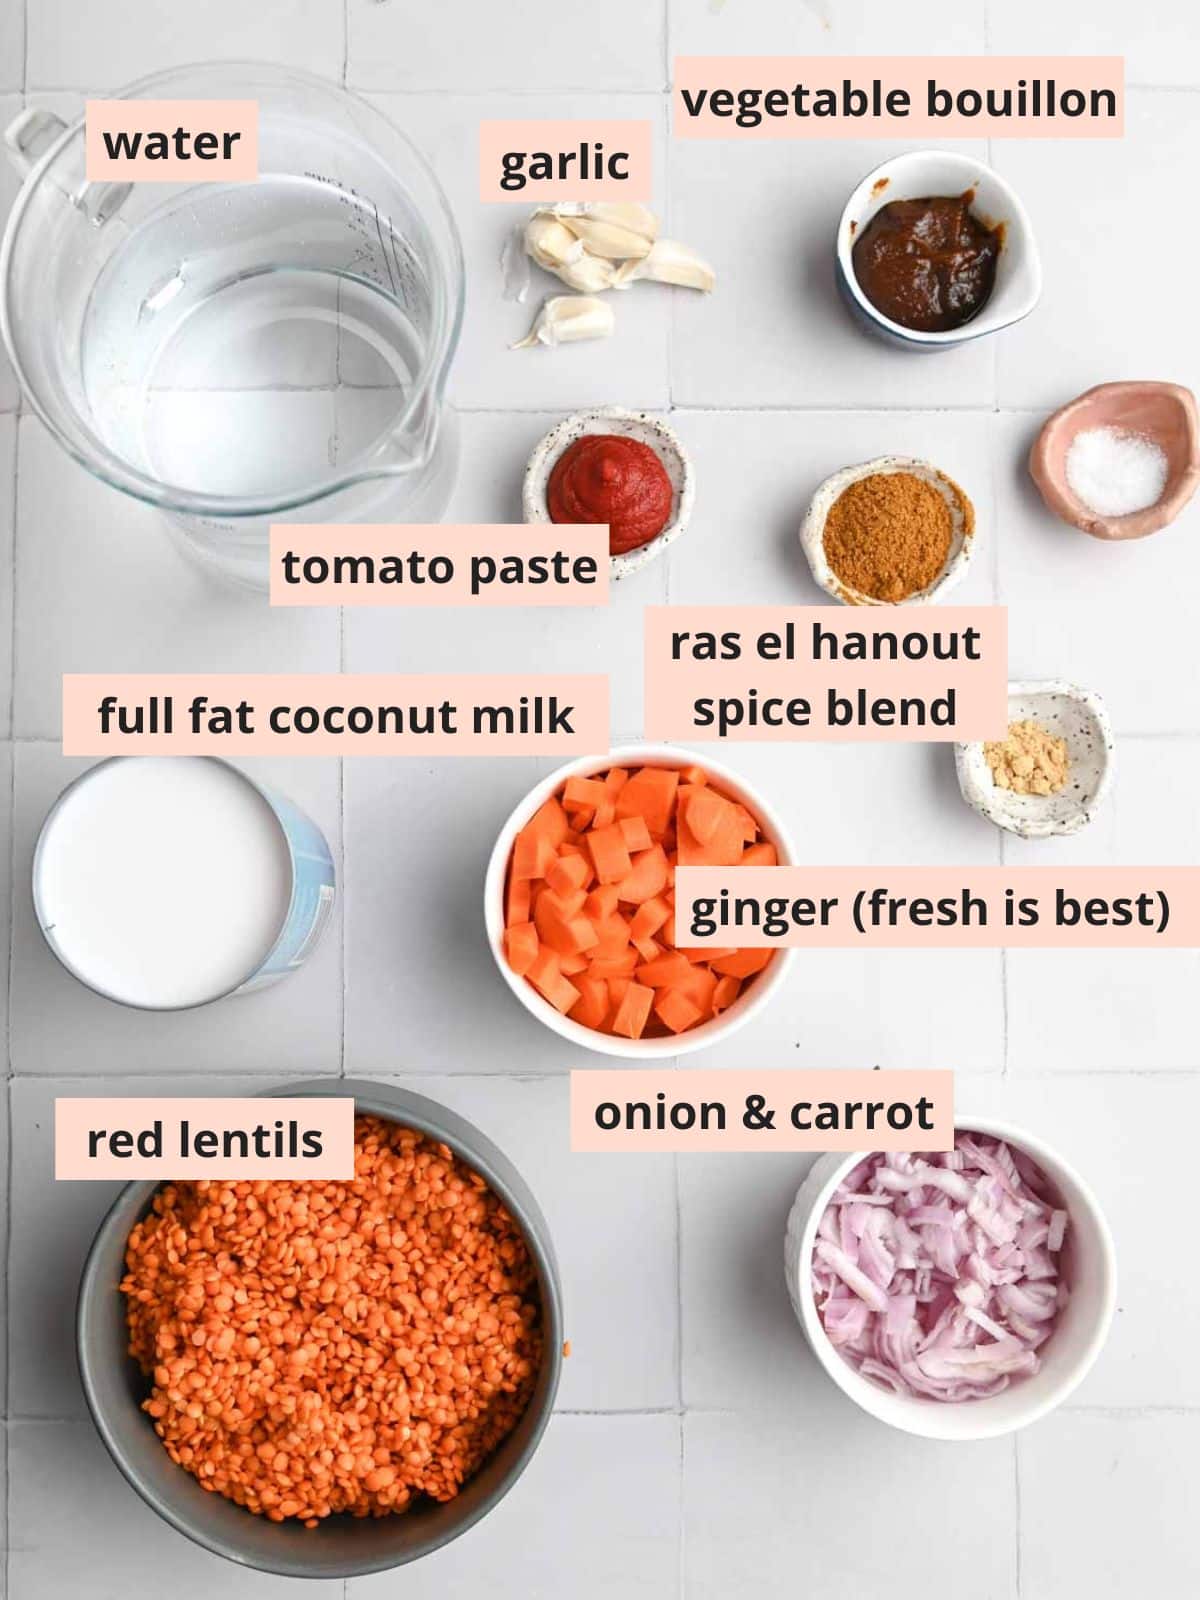 Labeled ingredients used to make lentil stew.